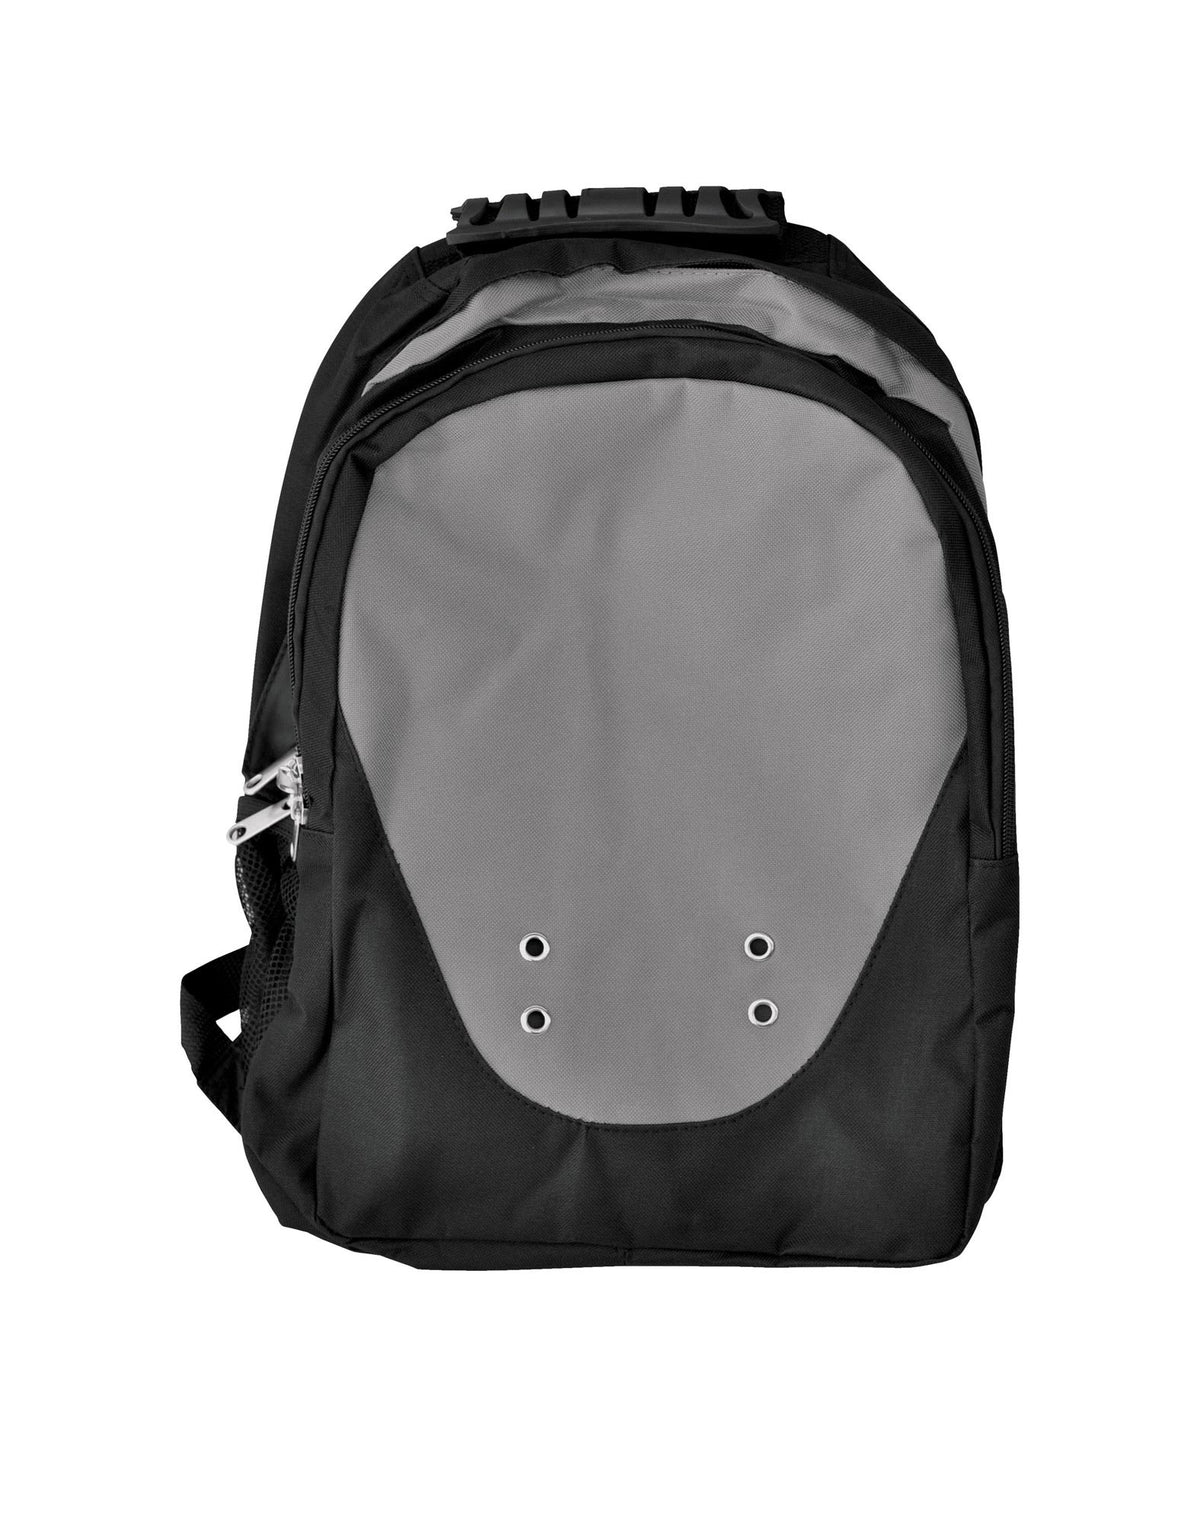 B5001 Climber Backpack